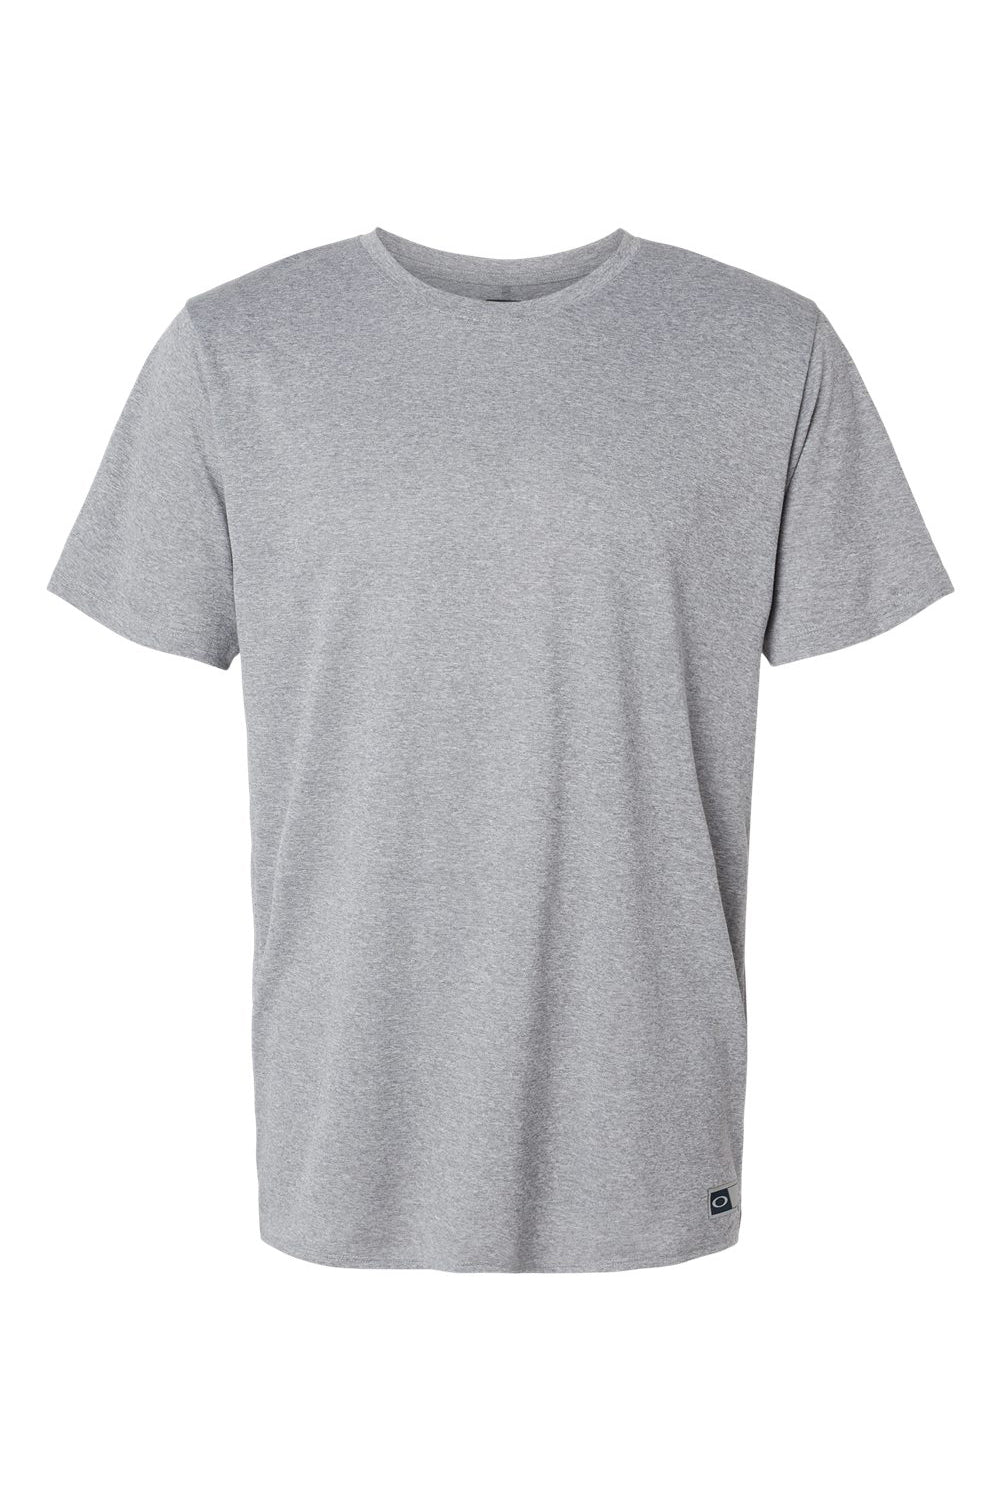 Oakley FOA402991 Mens Team Issue Hydrolix Short Sleeve Crewneck T-Shirt Heather Granite Grey Flat Front